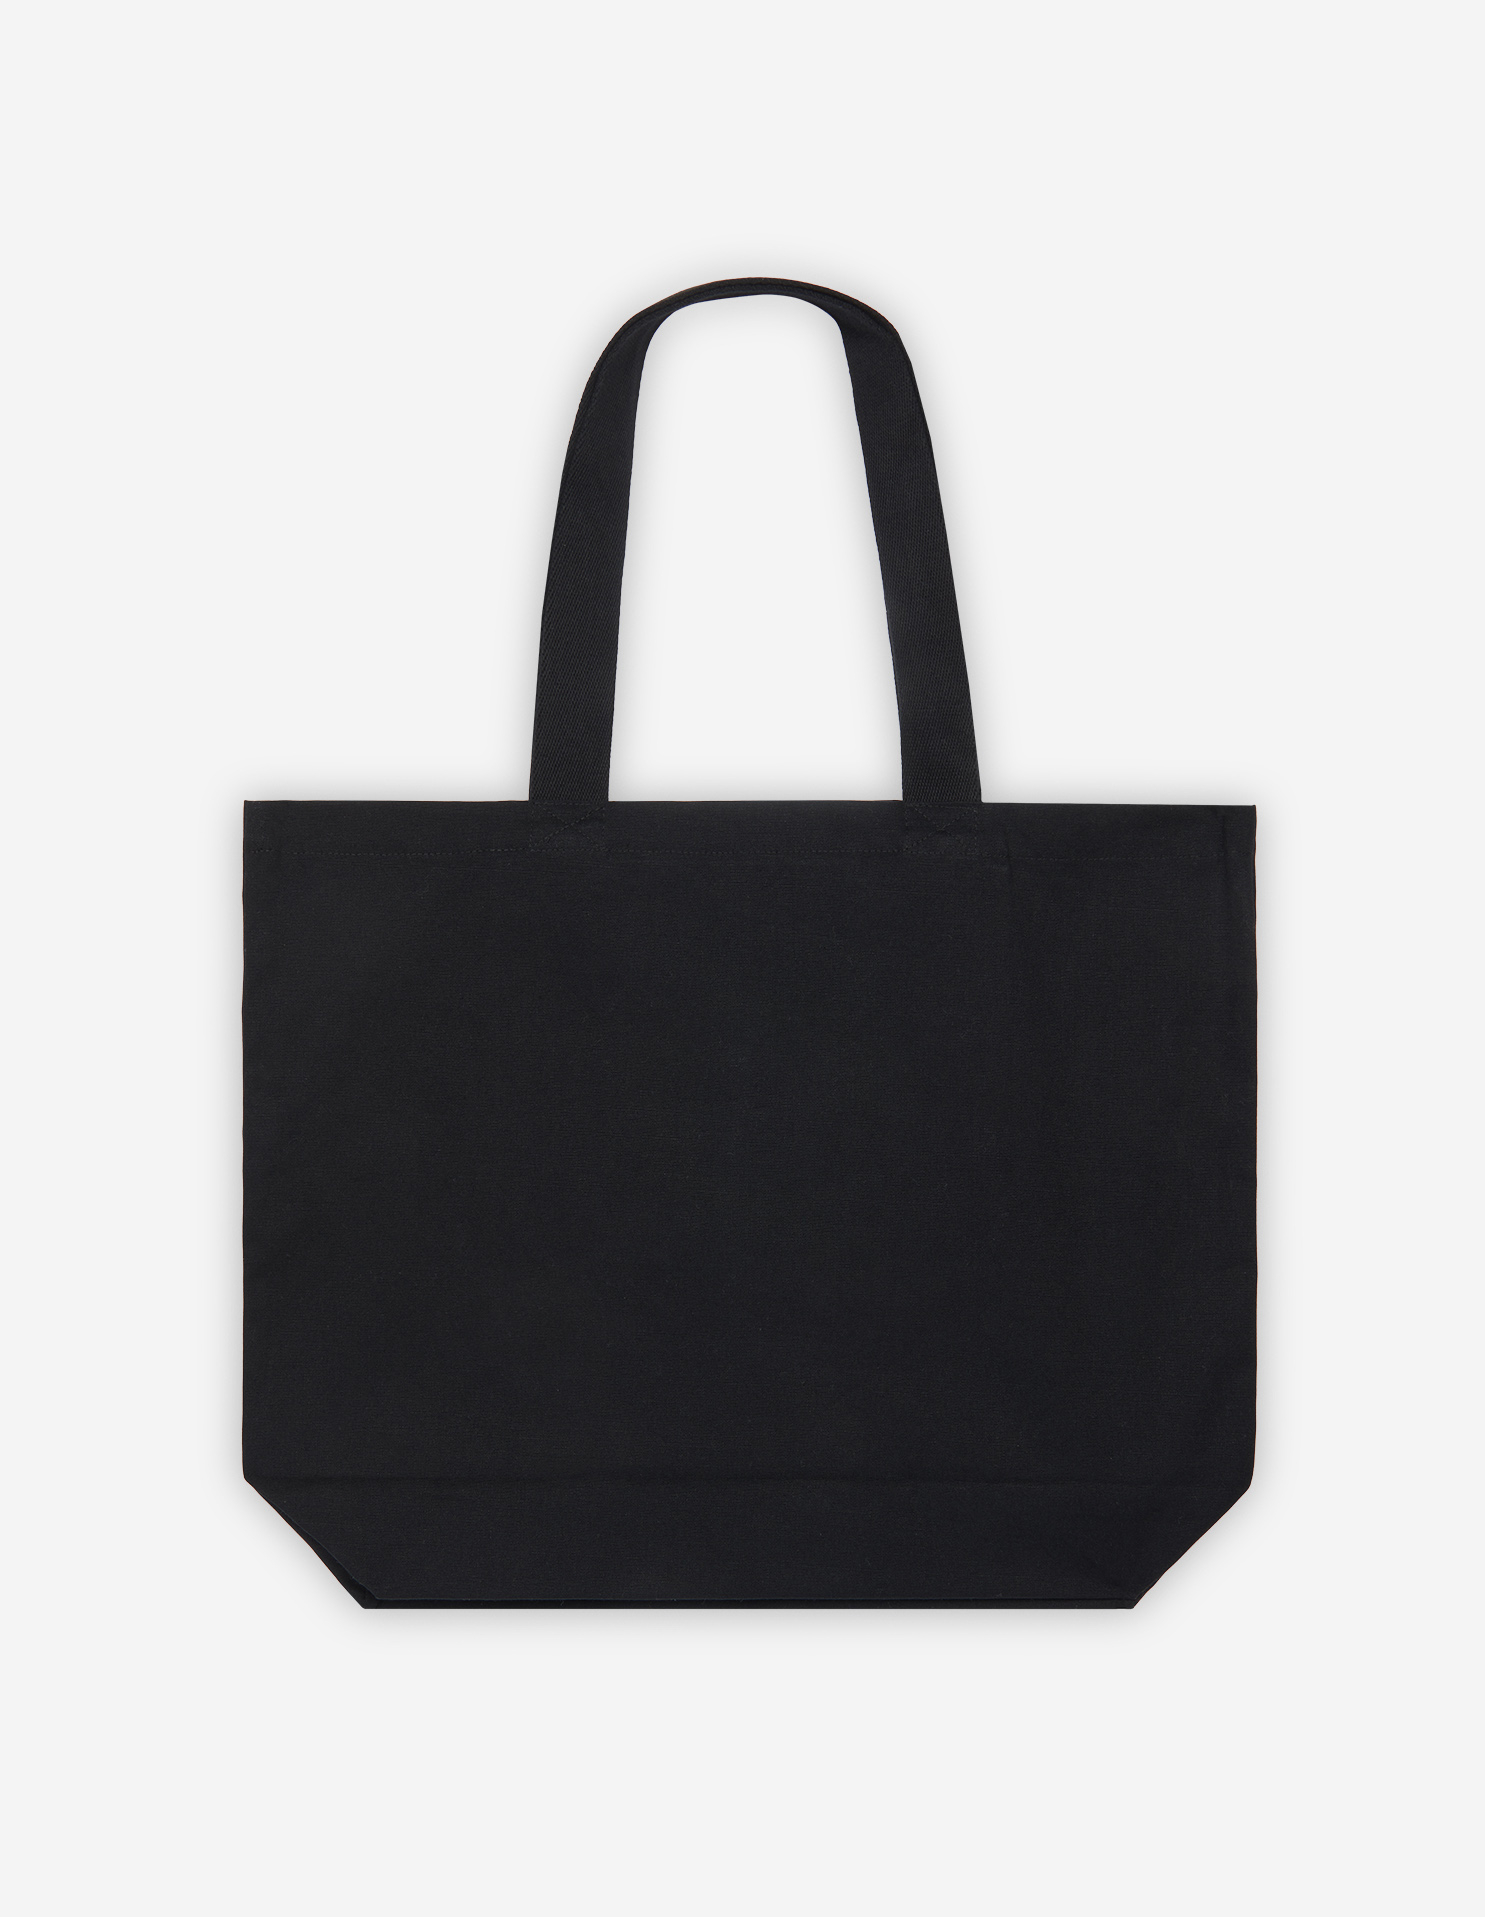 MK handbags new large tote bag shoulder shopping bag portable